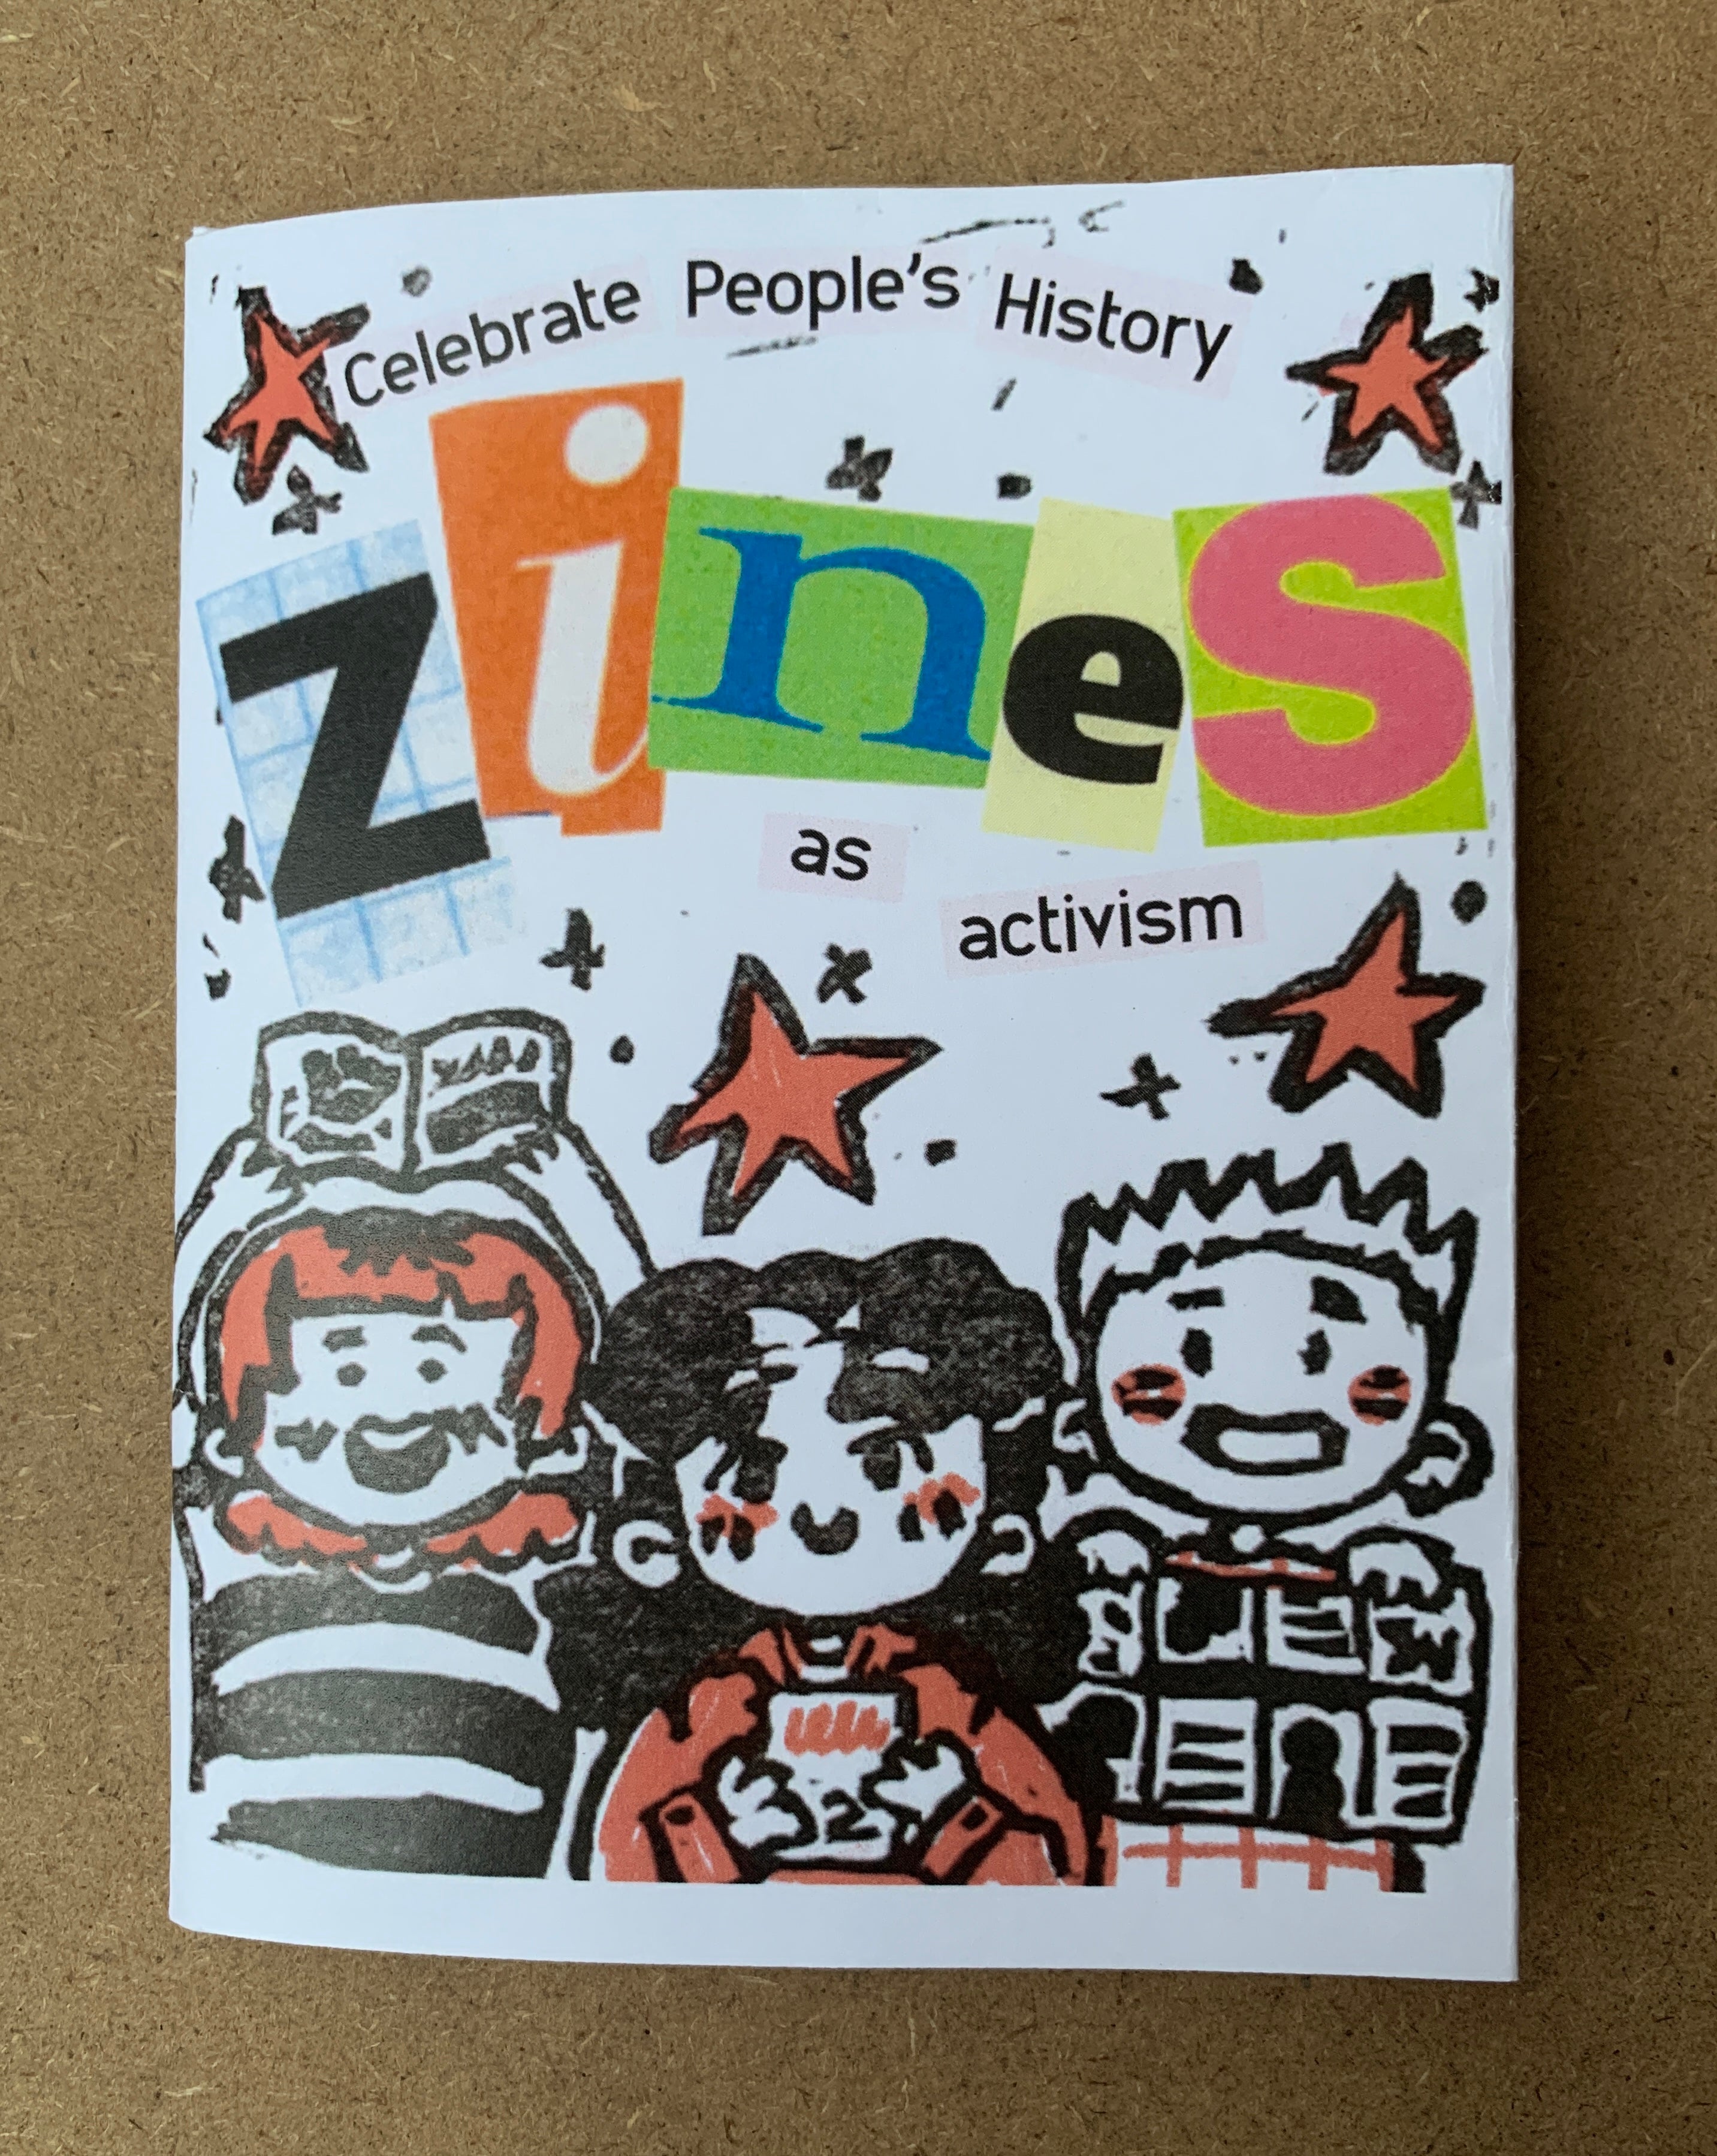 Free Zine! Celebrate People's History - Zines as activism